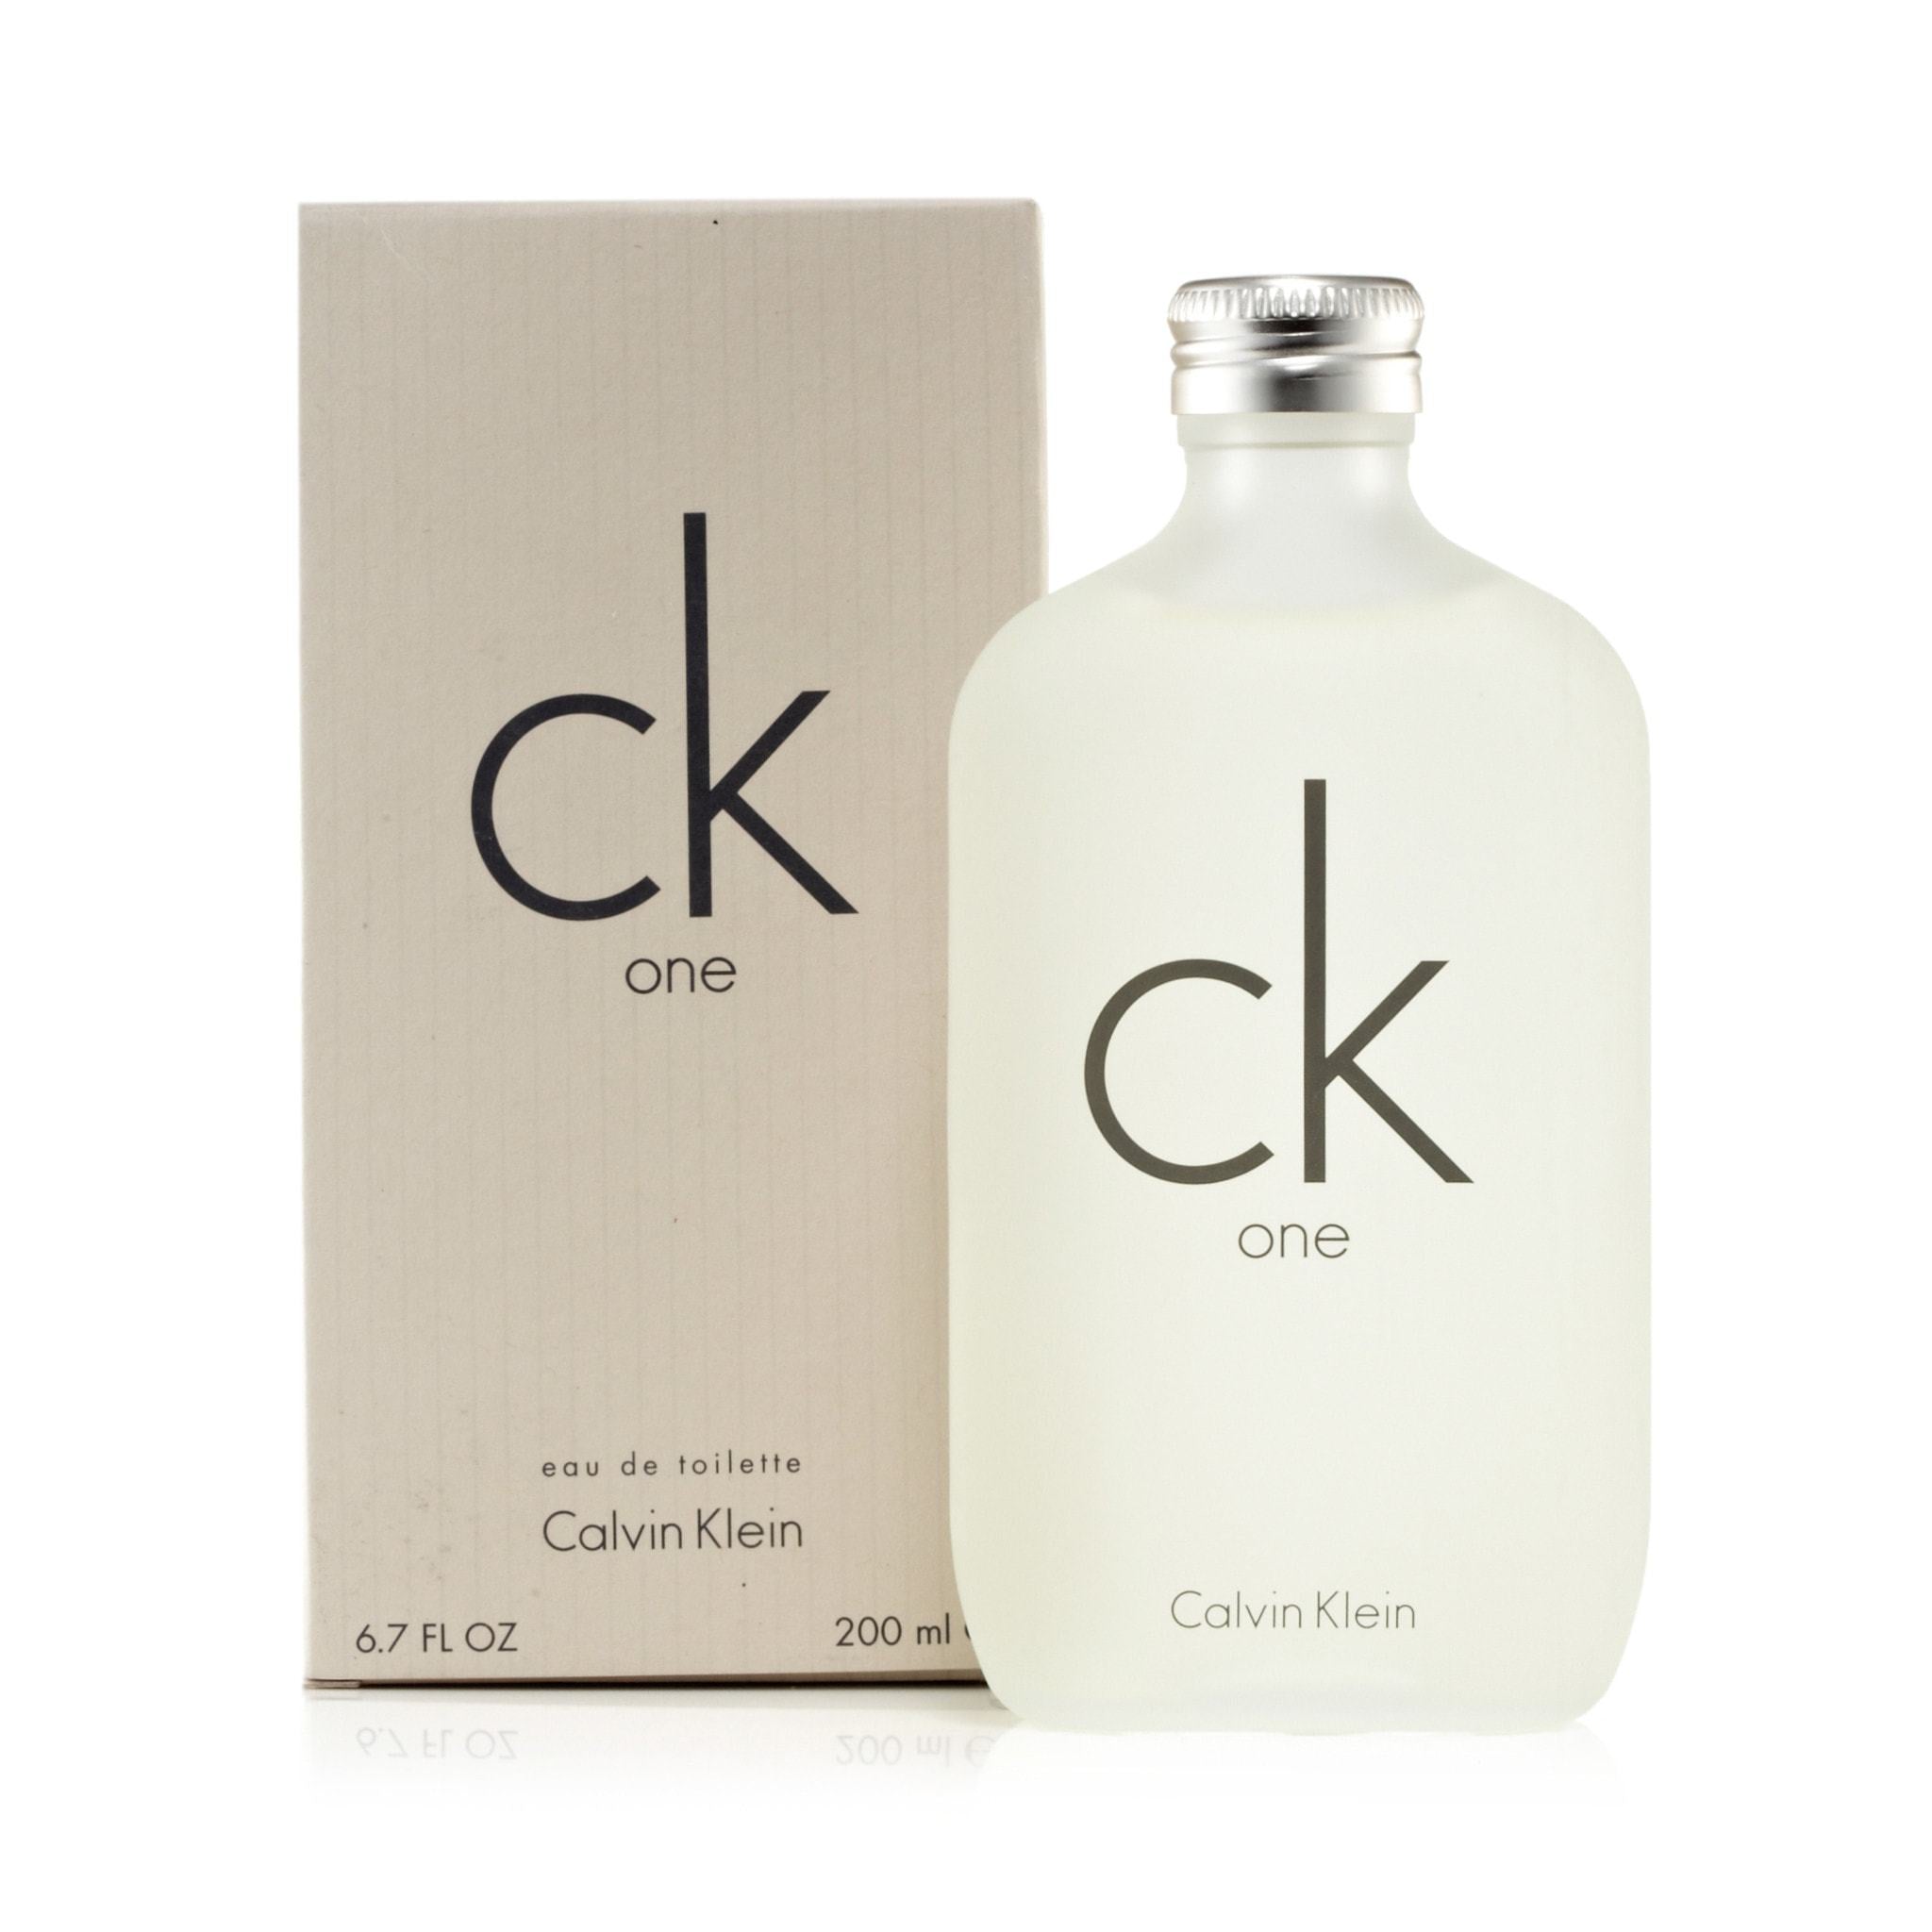 CK Product 8 Oz. Squeeze Bottles 